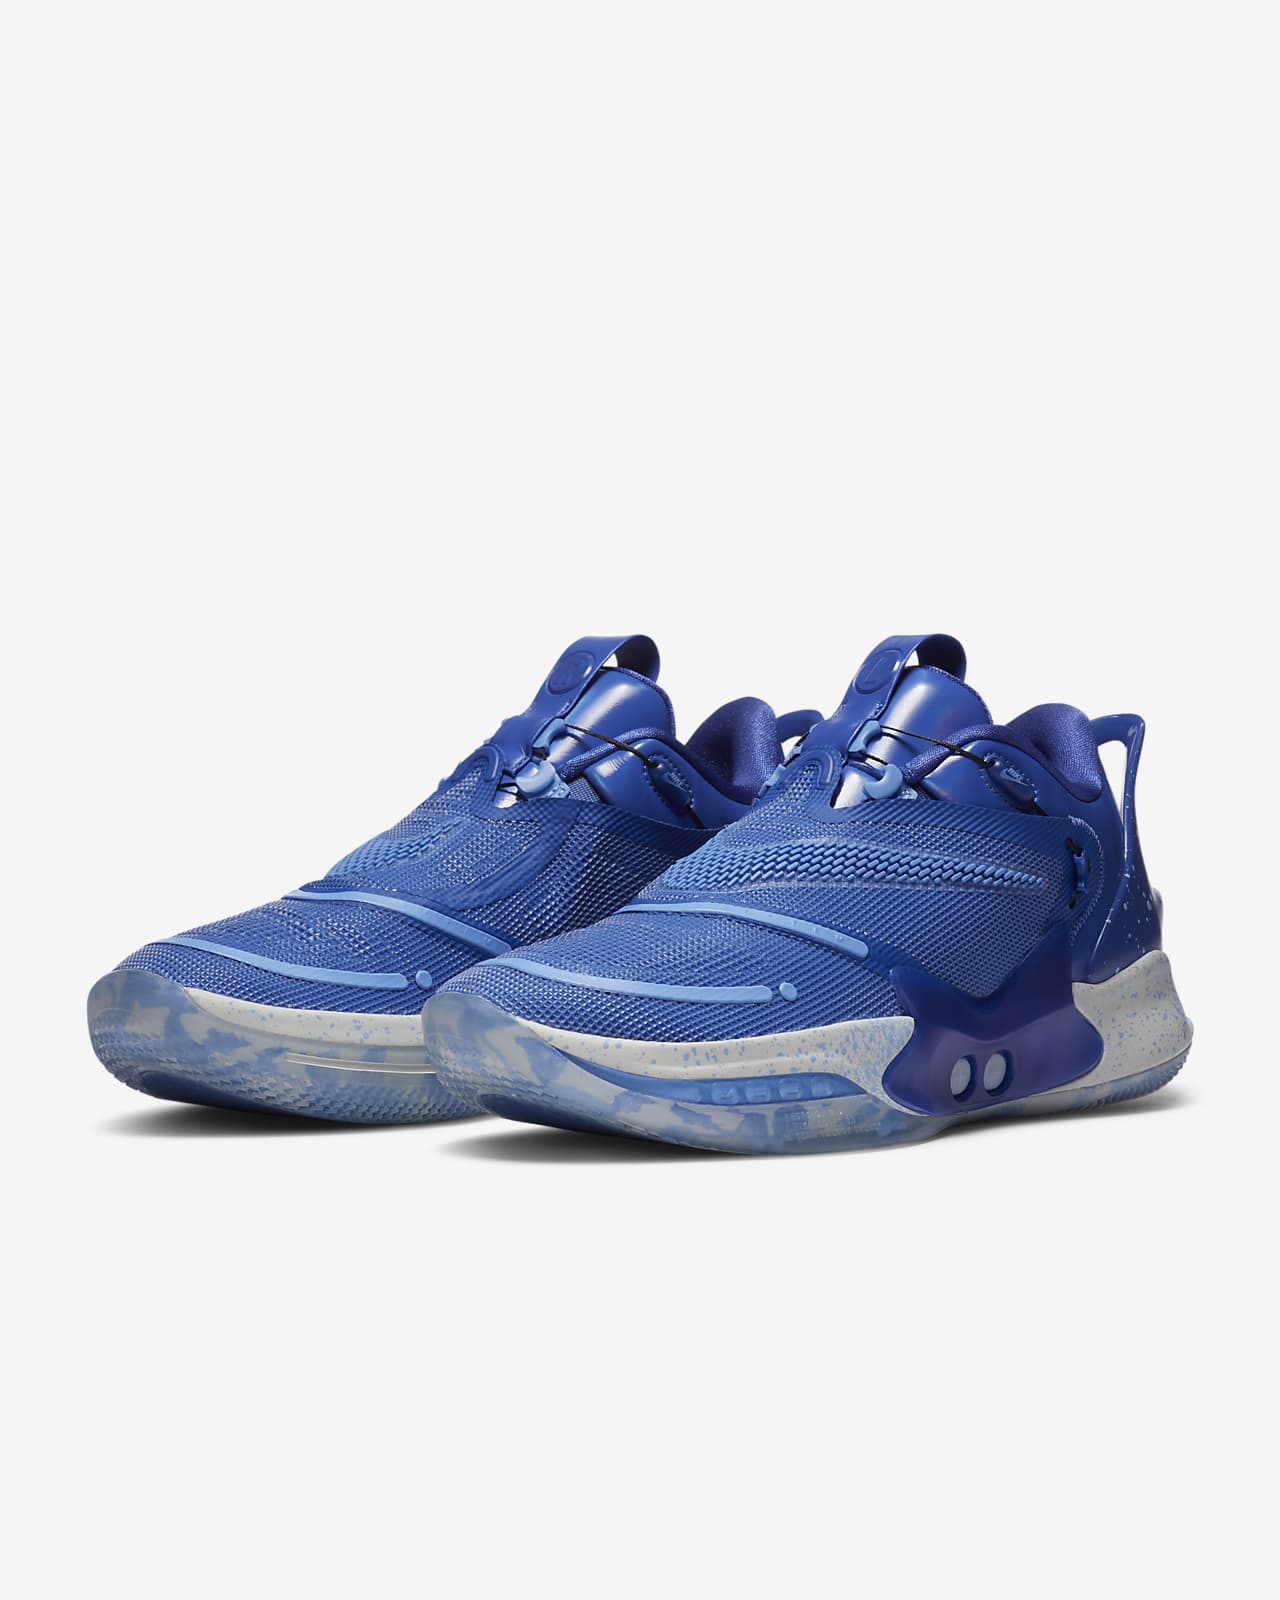 Nike Adapt BB 2.0 Basketball Shoes